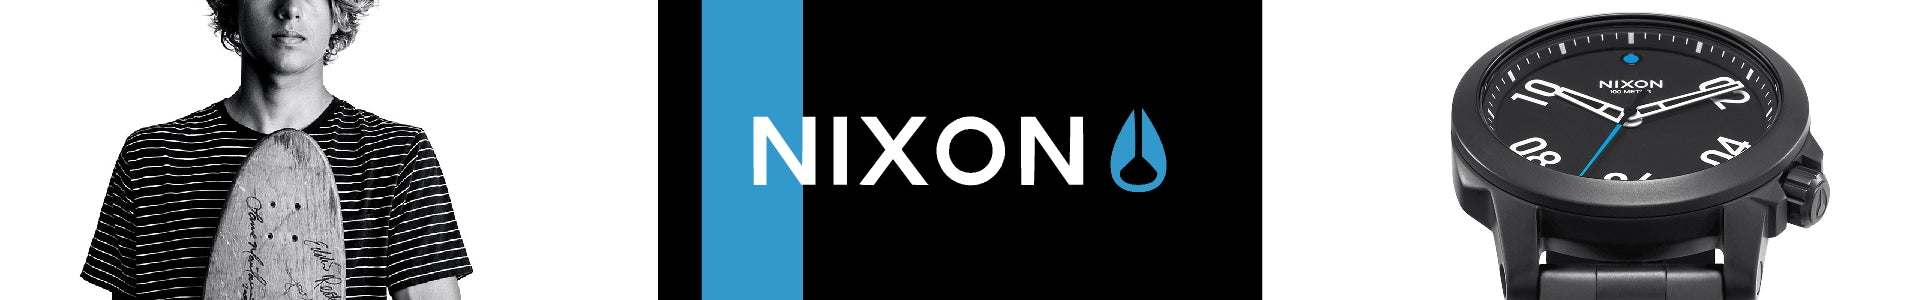 Nixon Collection Banner